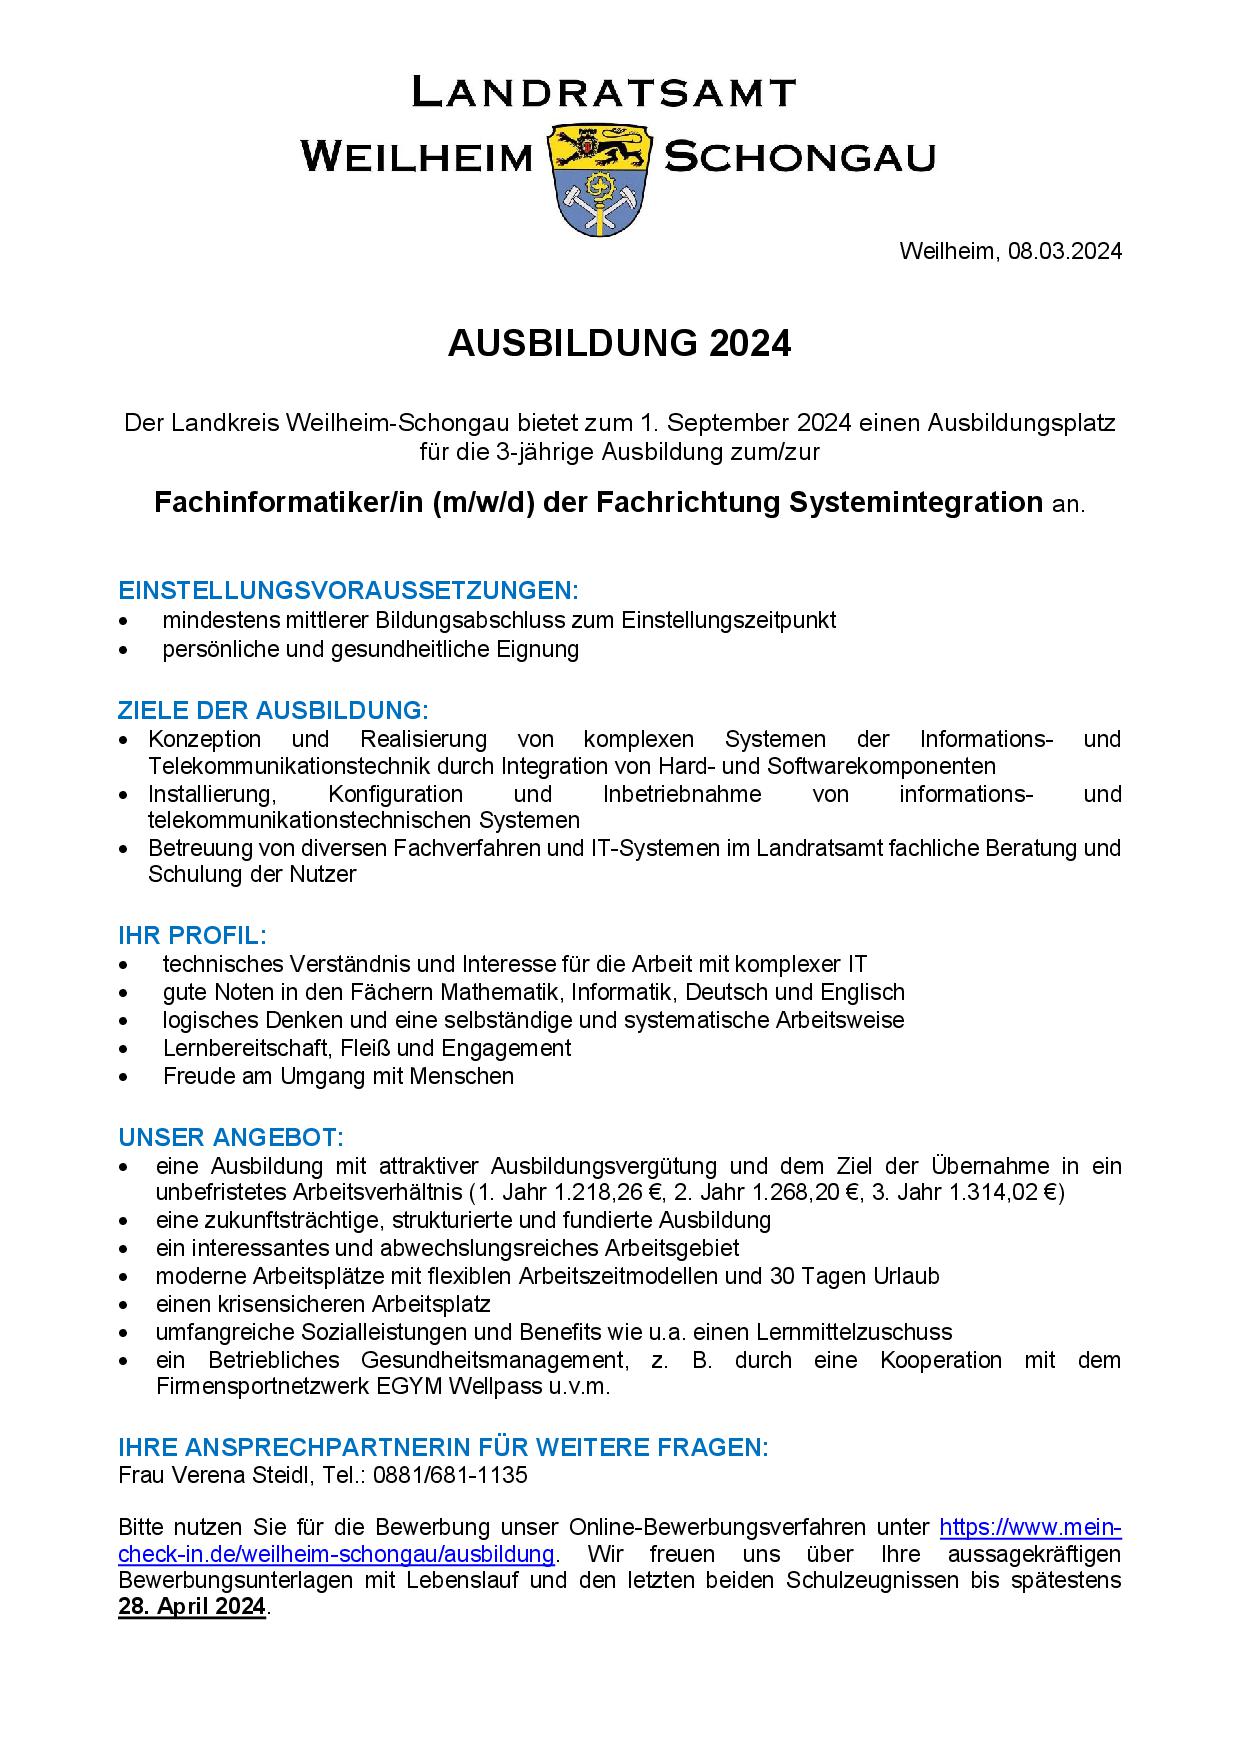 Ausbildung 2024 - Fachinformatiker-in (m-w-d) Fachrichtung Systemintegration II.jpg